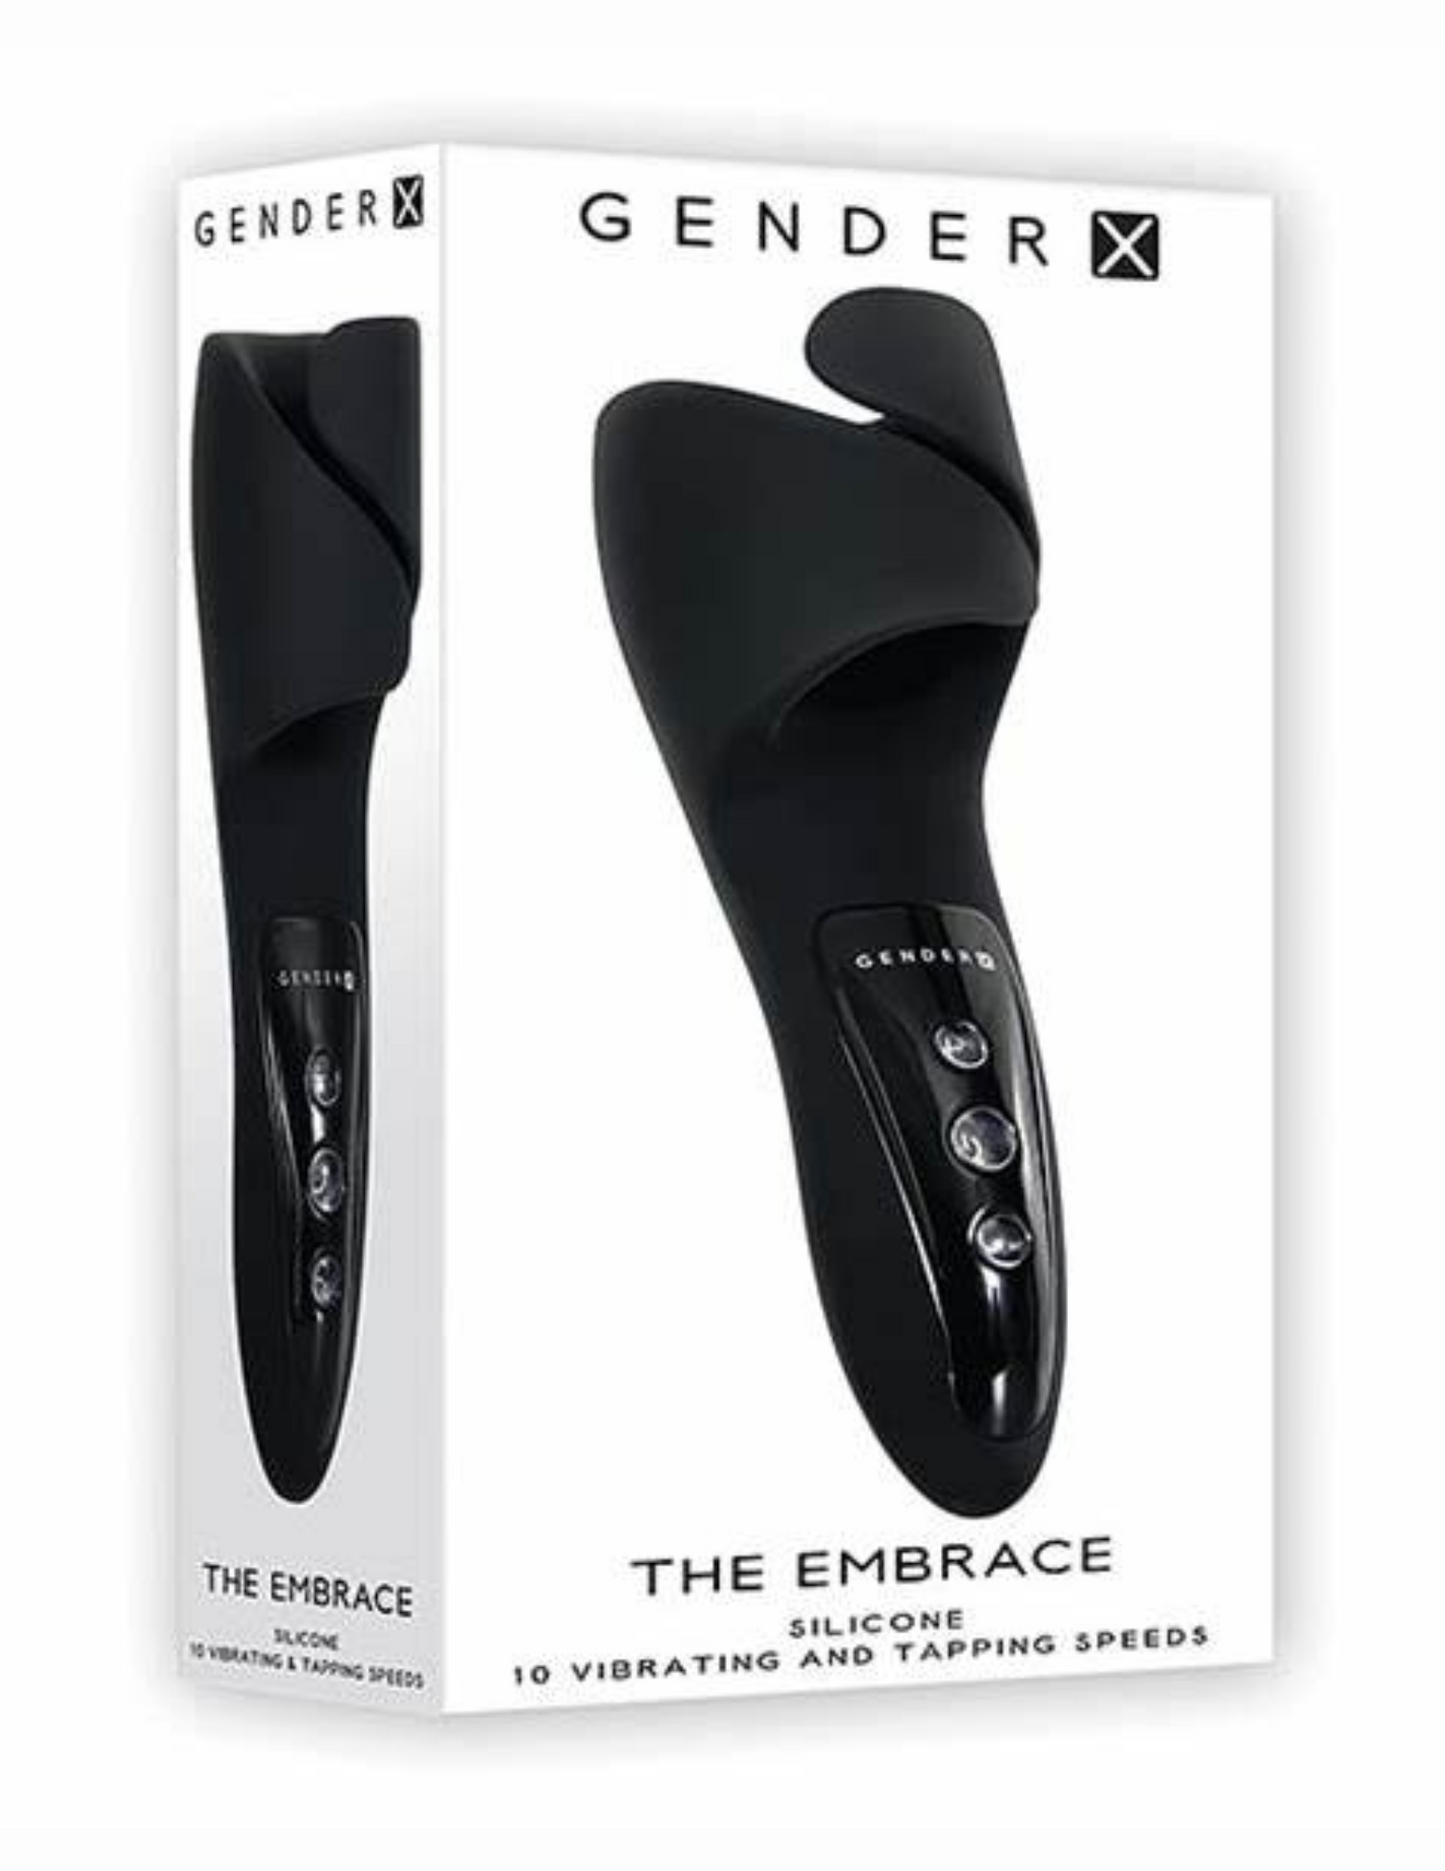 Evolved Gender X Embrace Vibrating Stroker in its box.